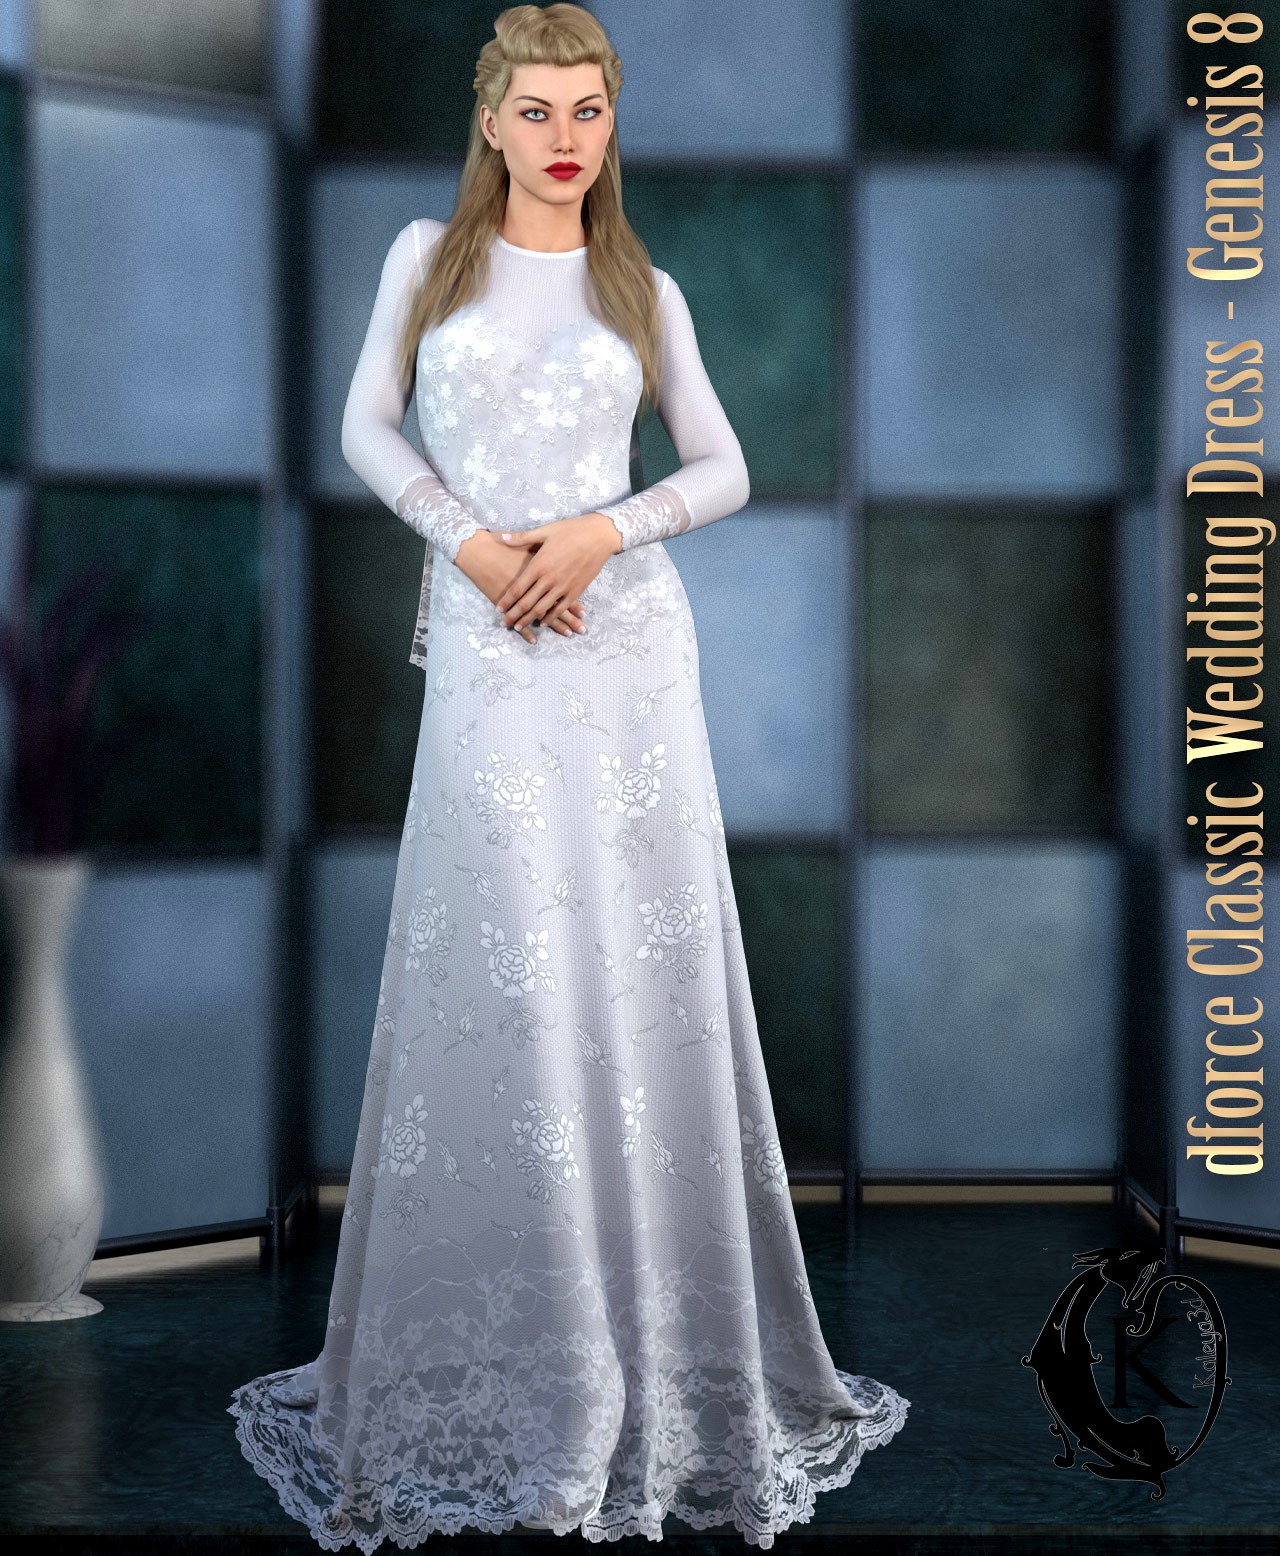 dforce - Classic Wedding Dress - Genesis 8